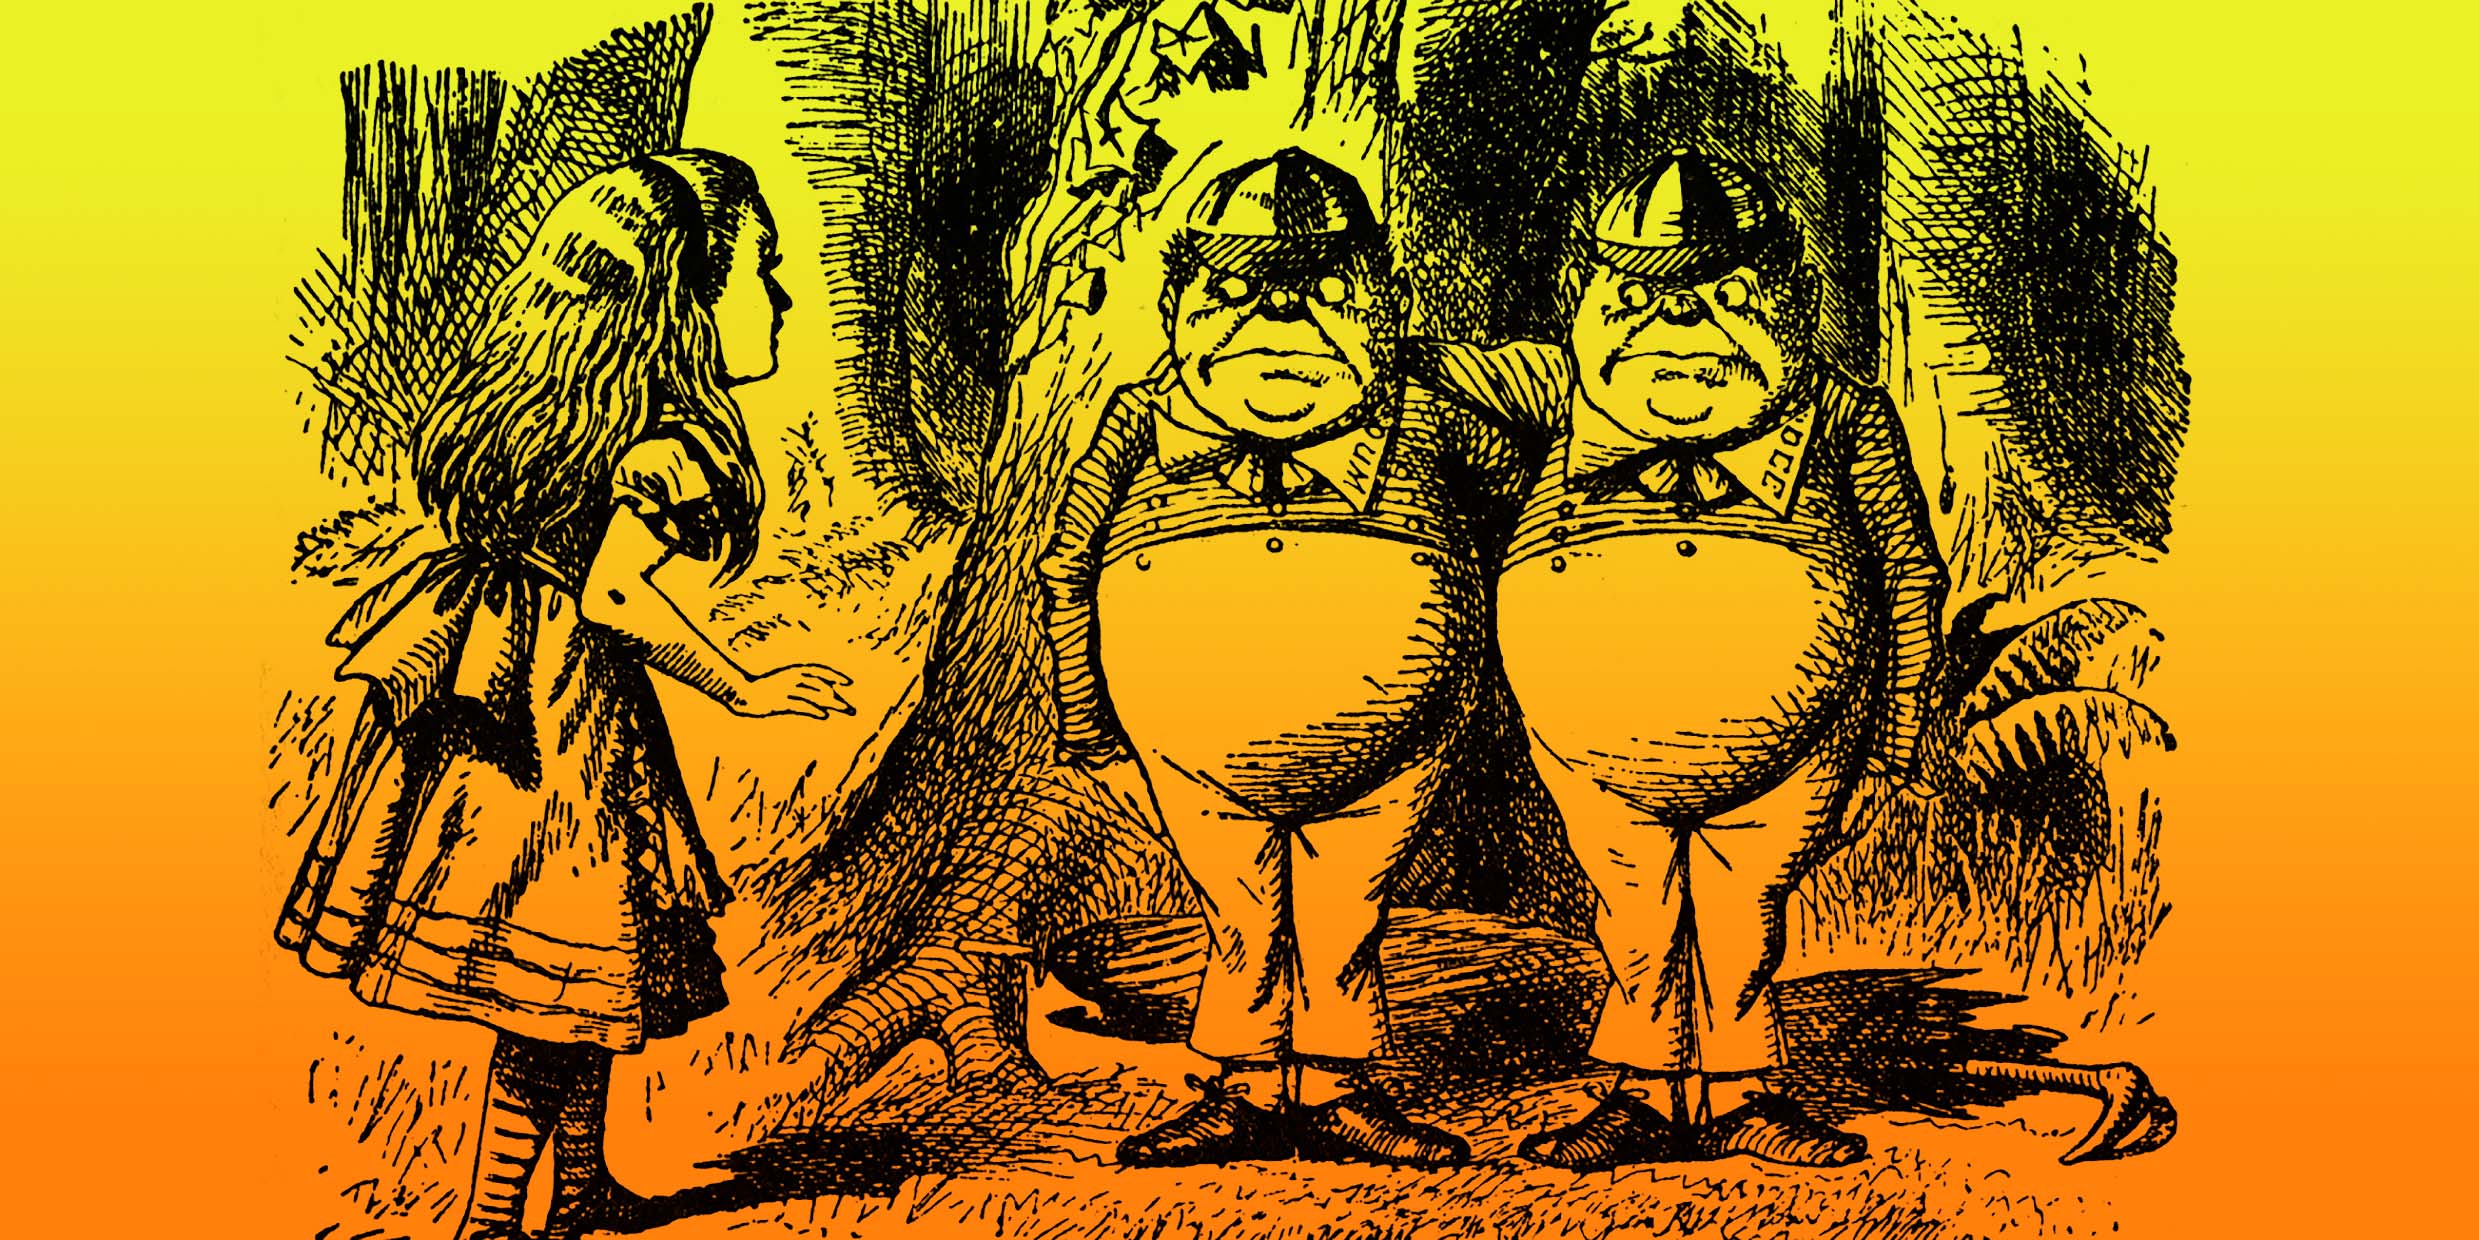 John Tenniel's illustration of Tweedledum and Tweedledee